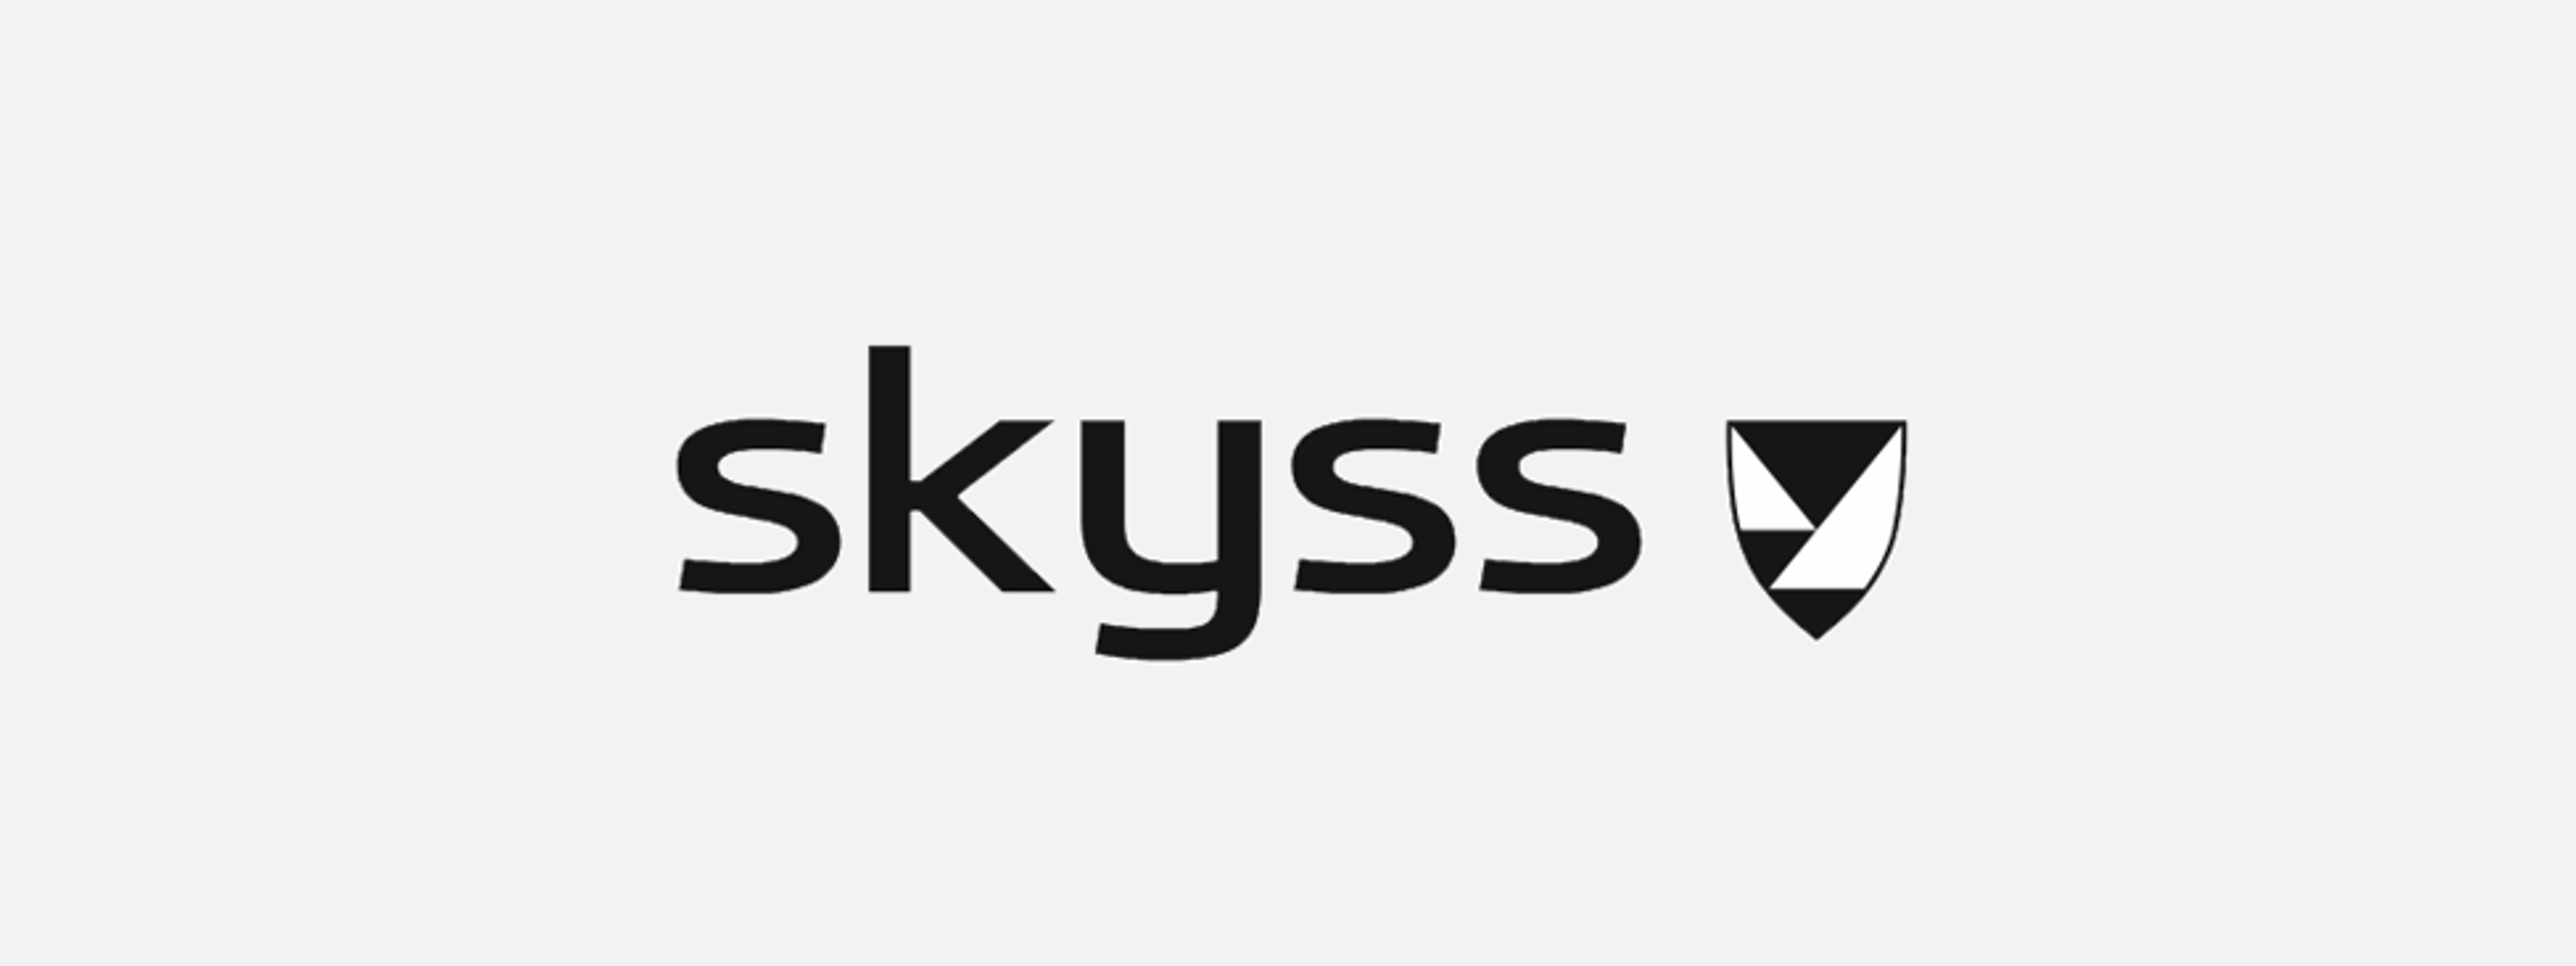 Skyss-logoen